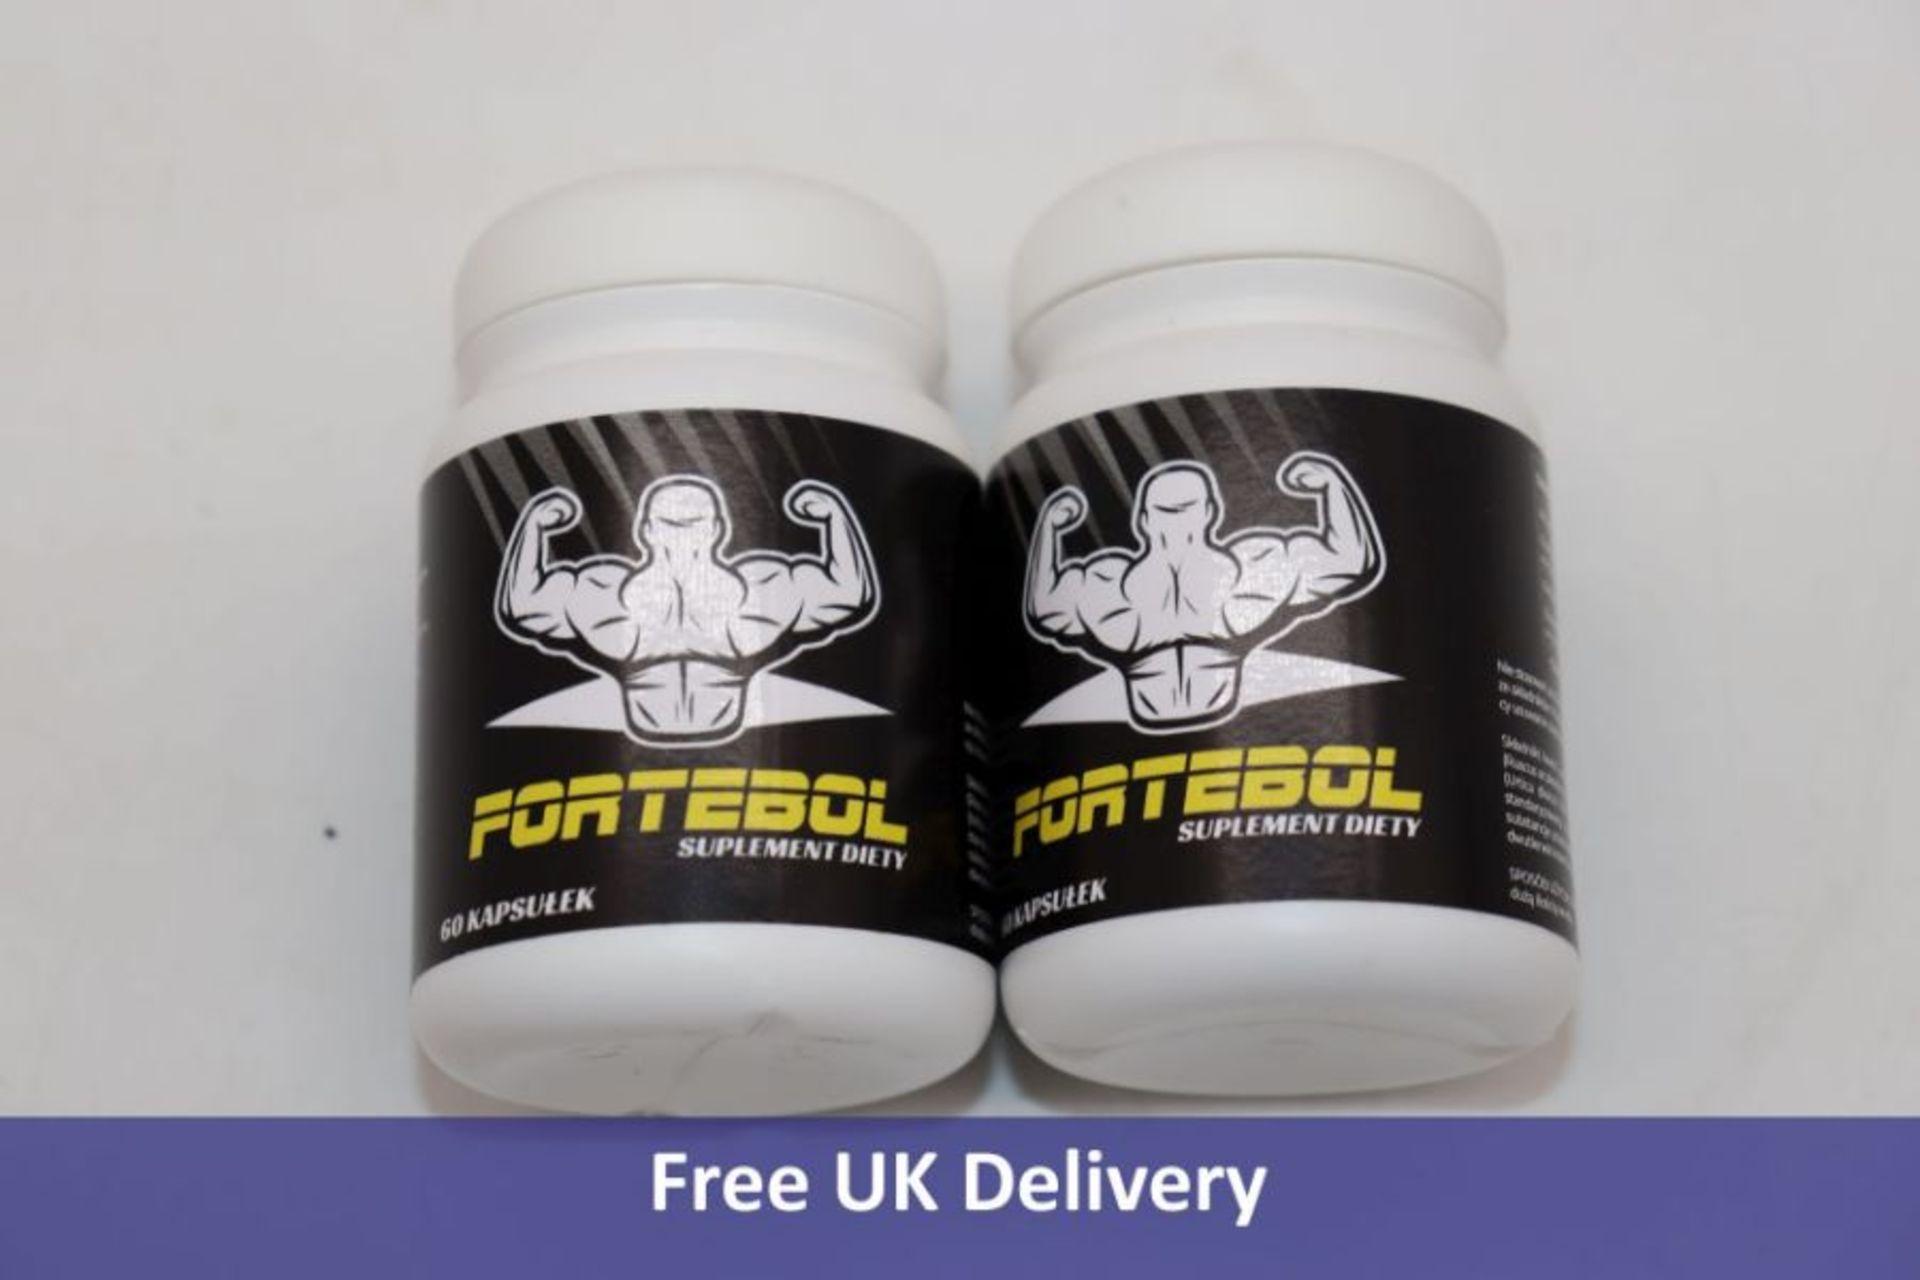 Two Fortebol Diet Supplements, 60 Capsules per tub